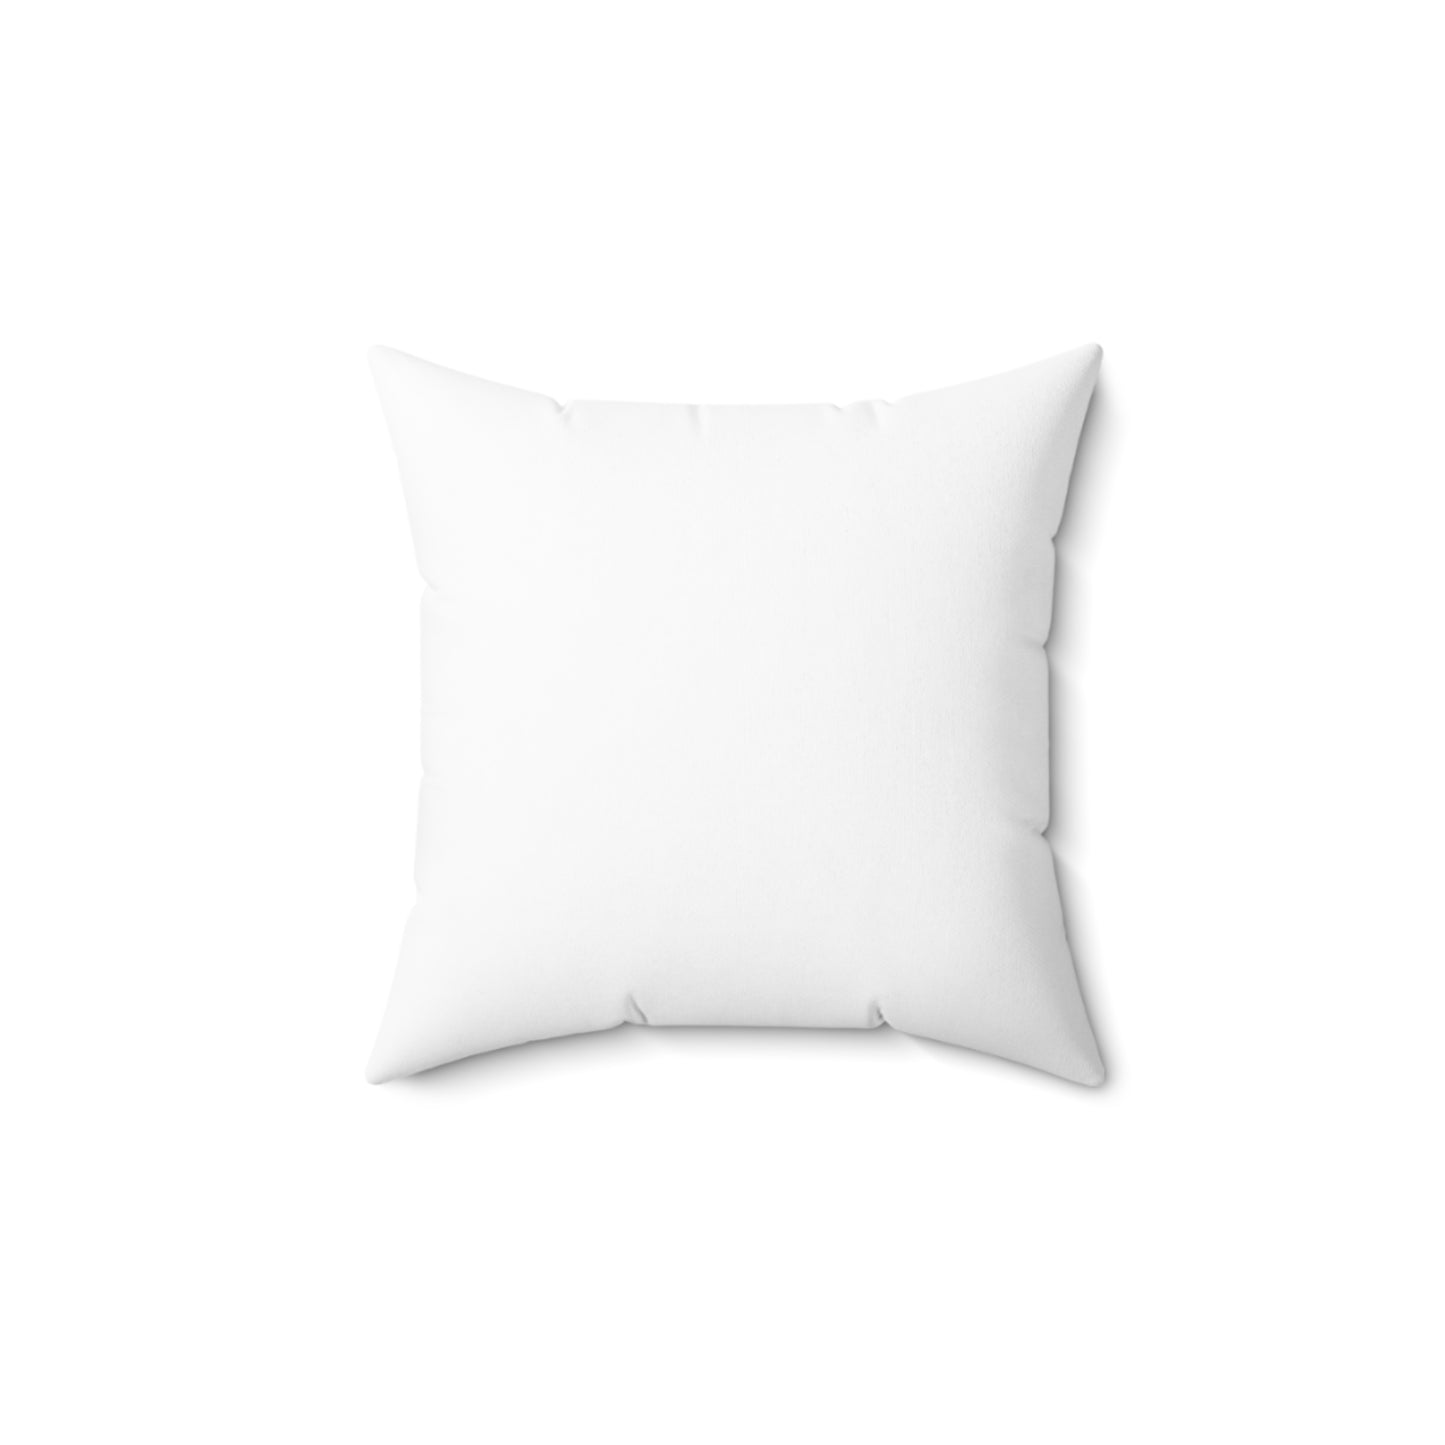 FWAG Square Pillow